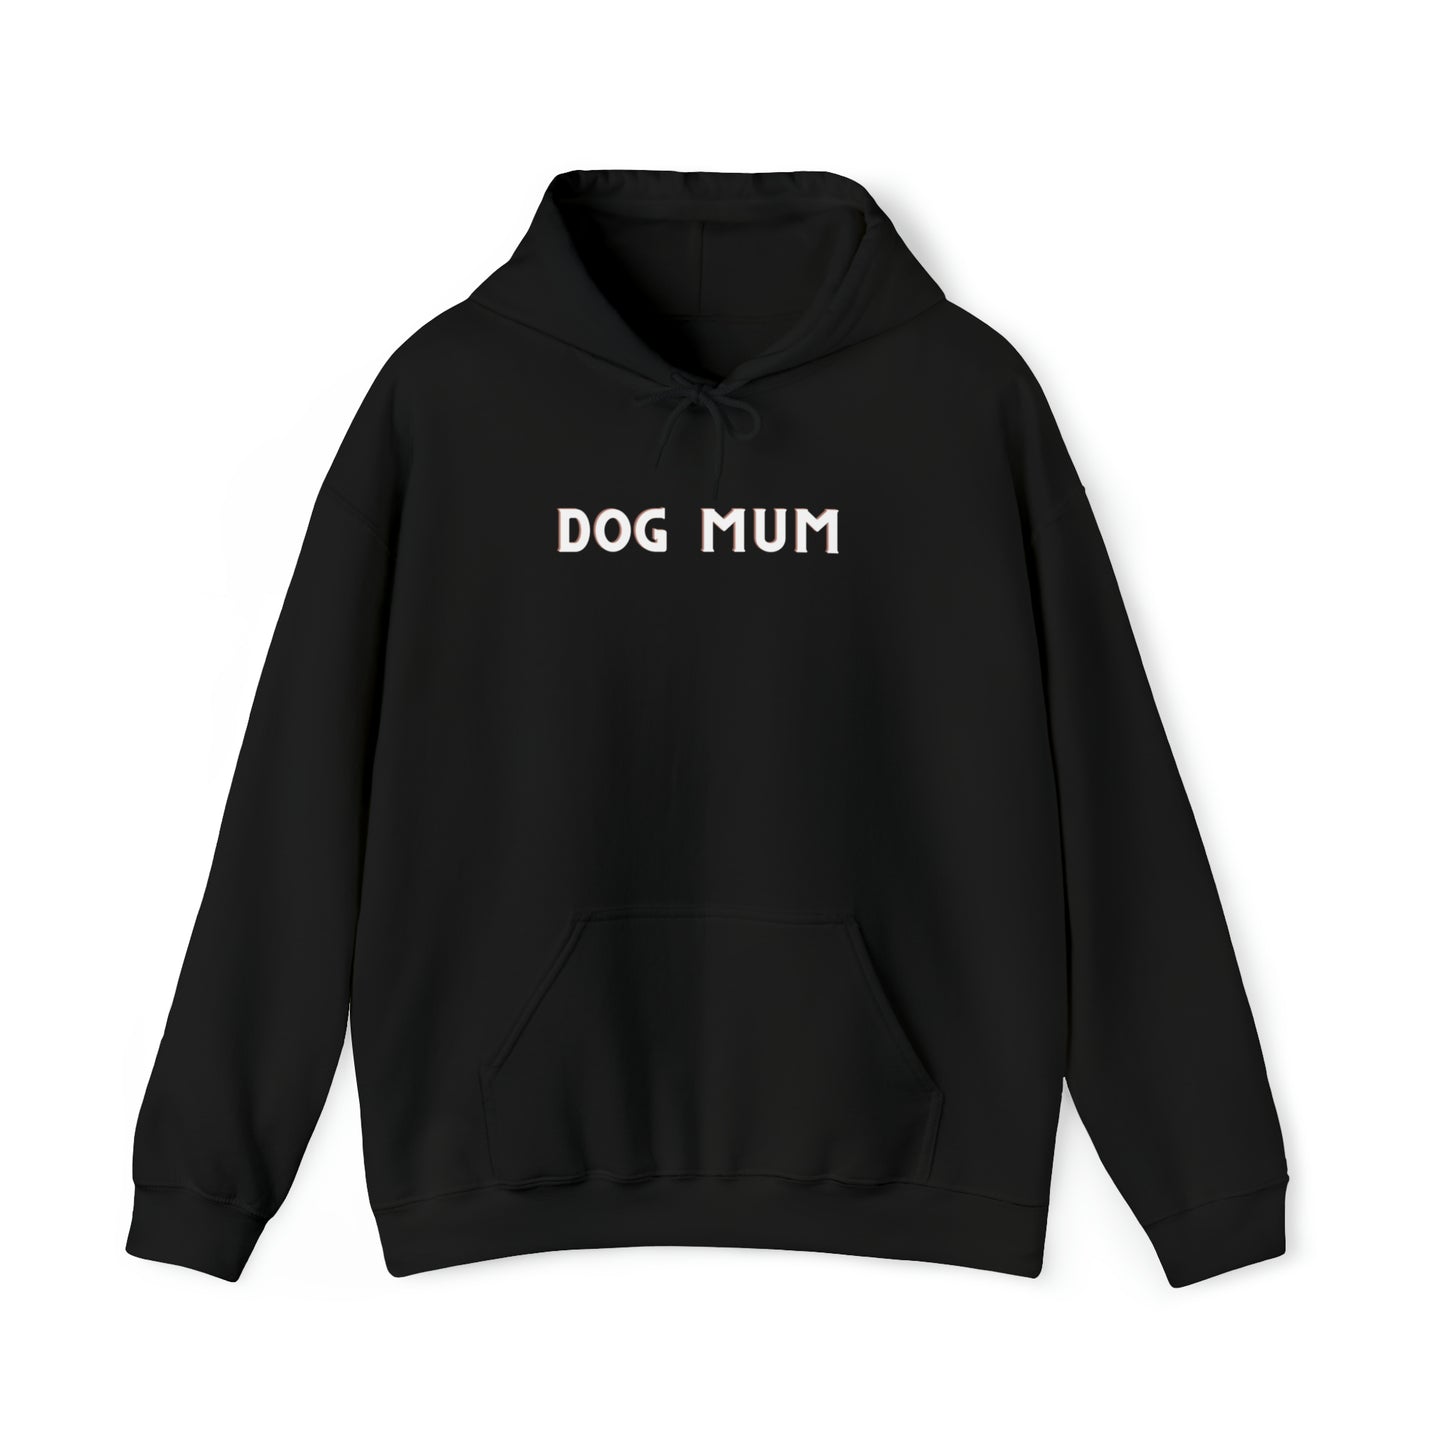 DOG MUM Hooded Sweatshirt